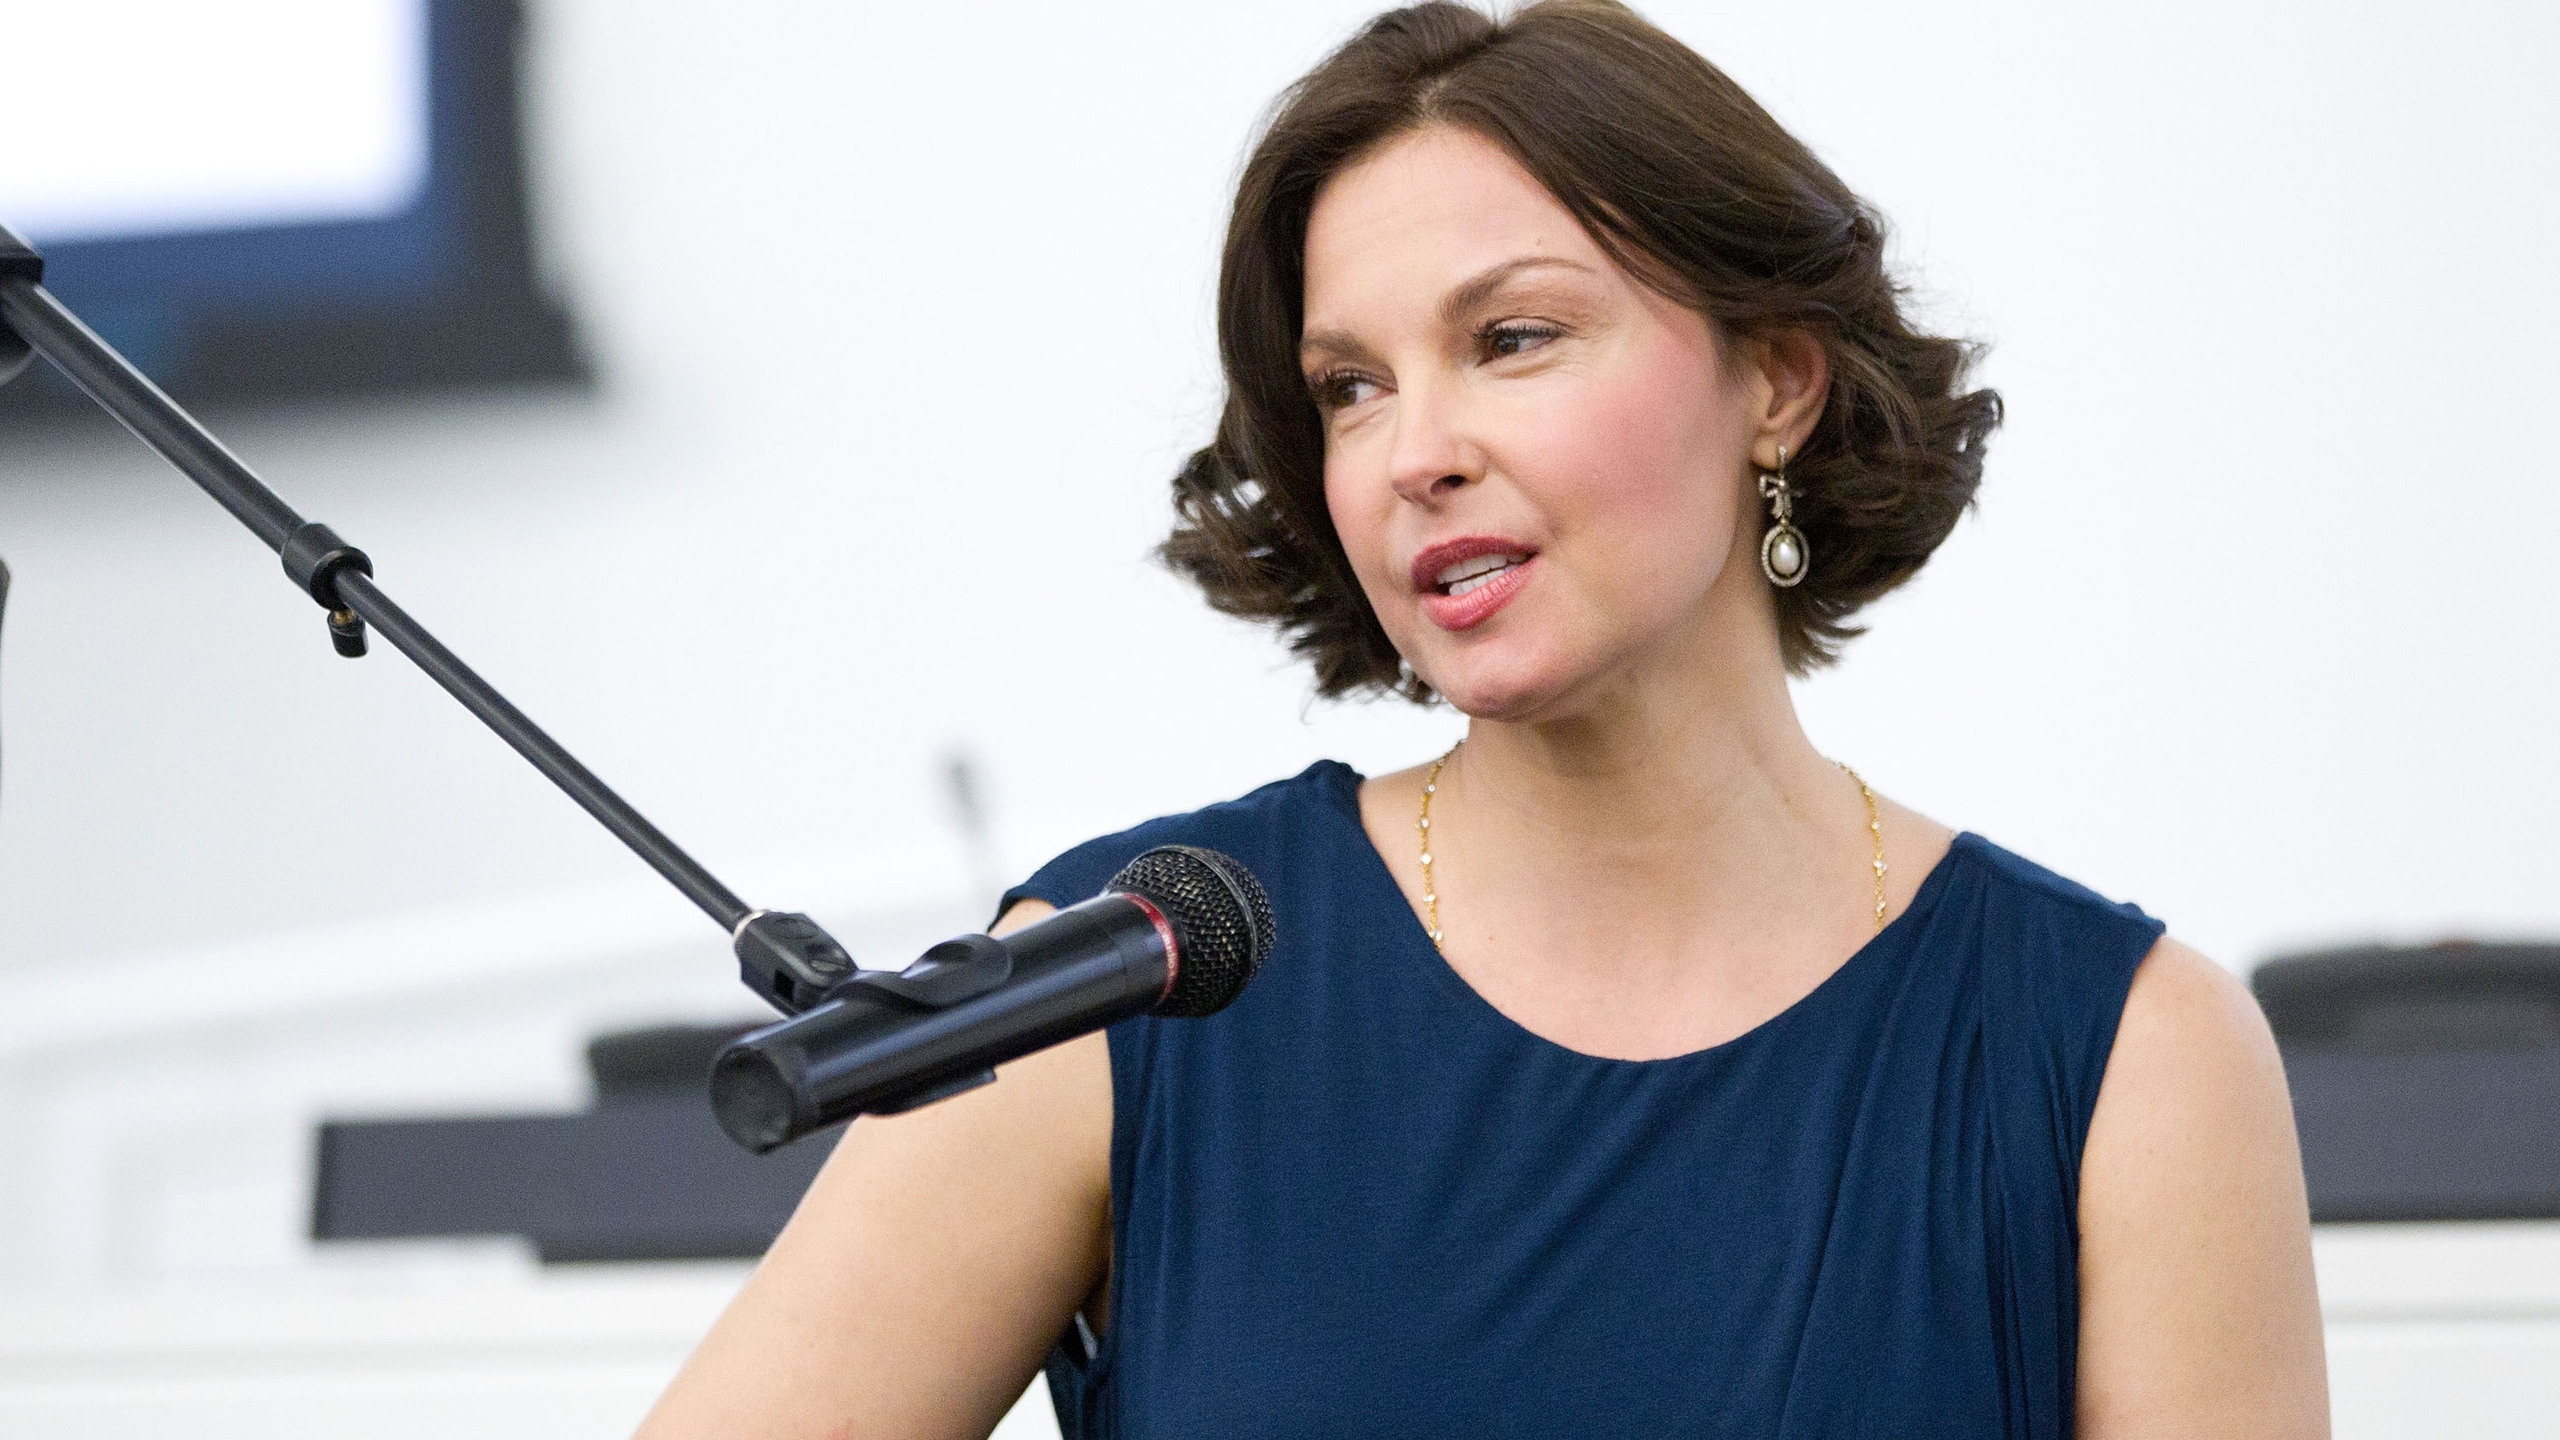 Ashley Judd Public Speech for 2560x1440 HDTV resolution